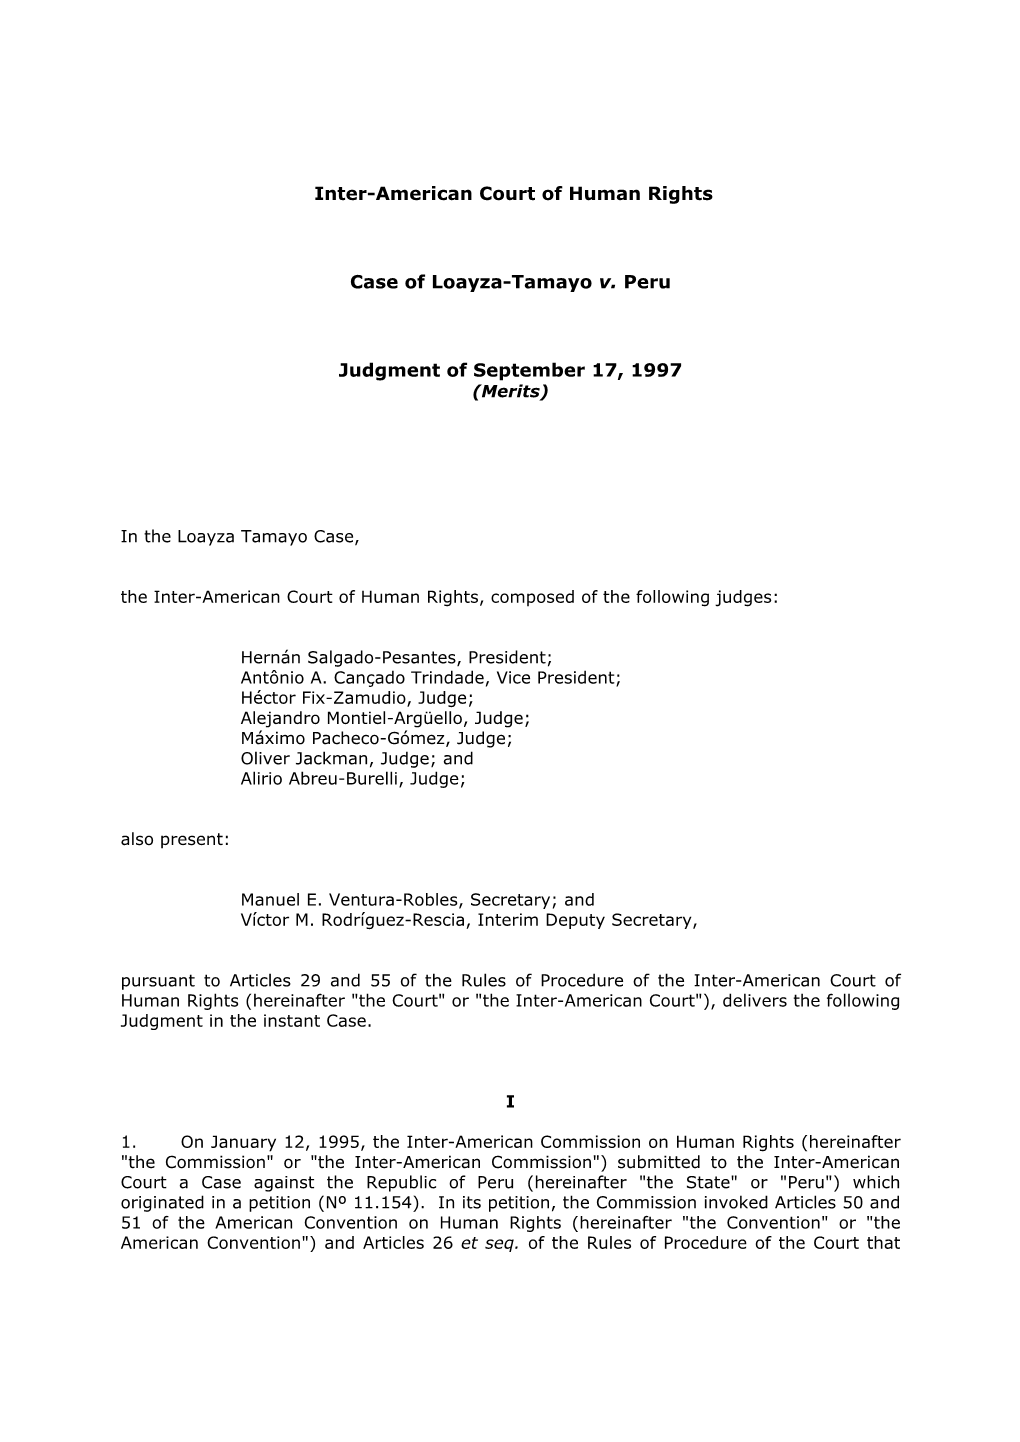 Inter-American Court of Human Rights Case of Loayza-Tamayo V. Peru